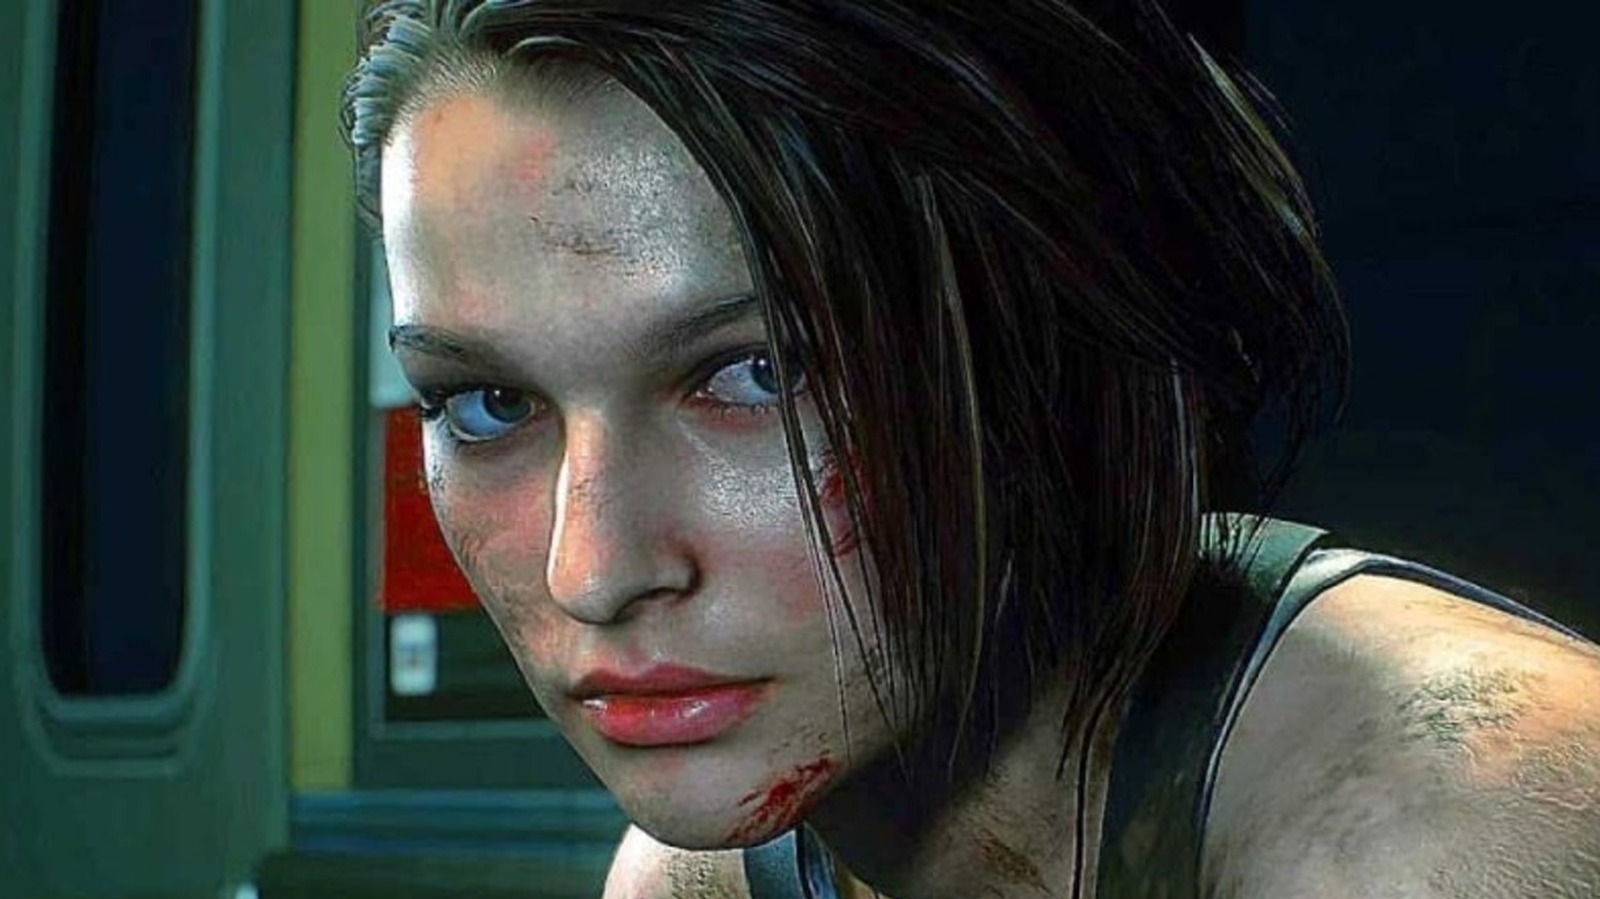 Tag: Resident Evil: Code Veronica X - Niche Gamer